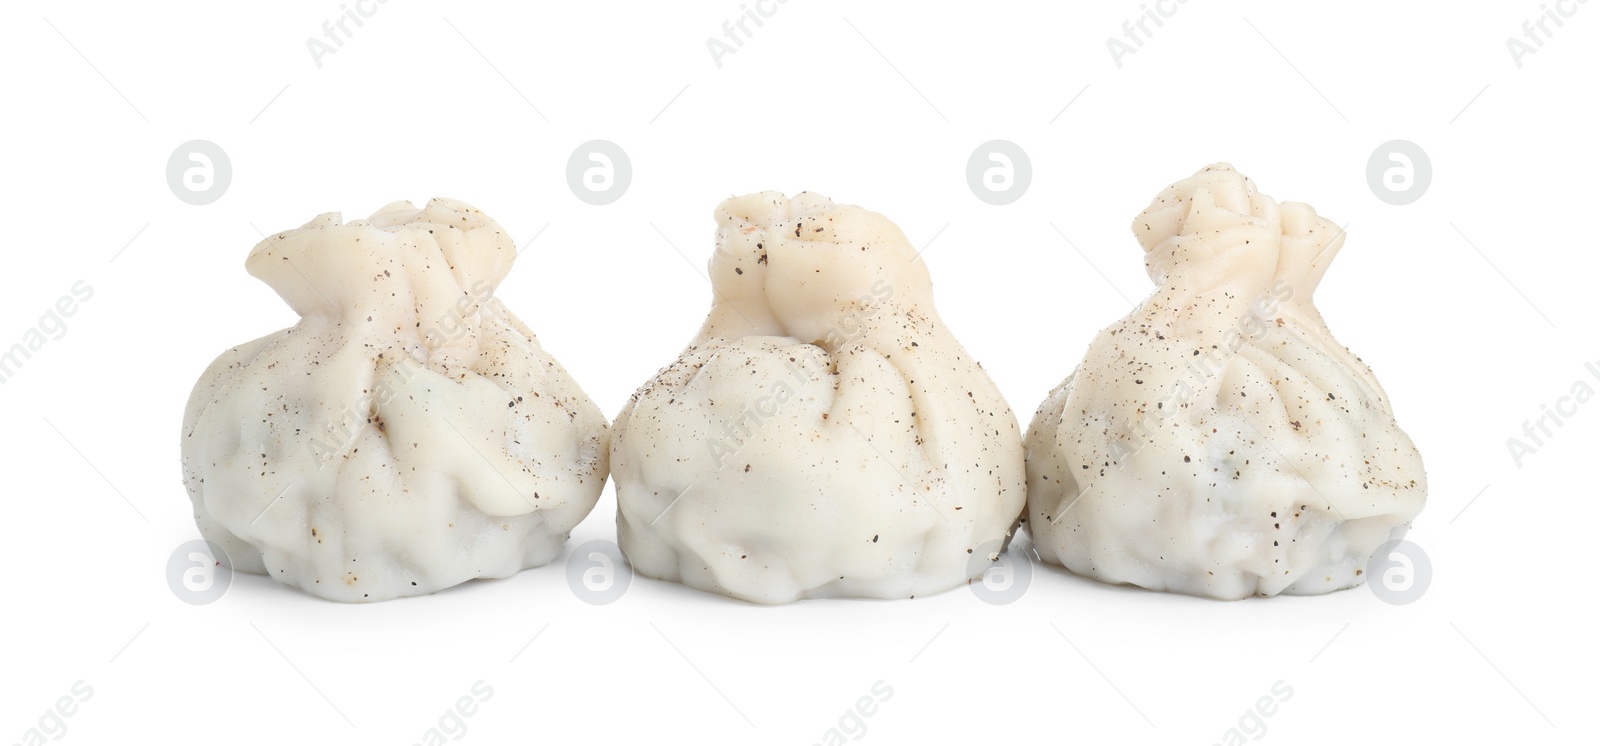 Photo of Three tasty khinkali (dumplings) and spices isolated on white. Georgian cuisine